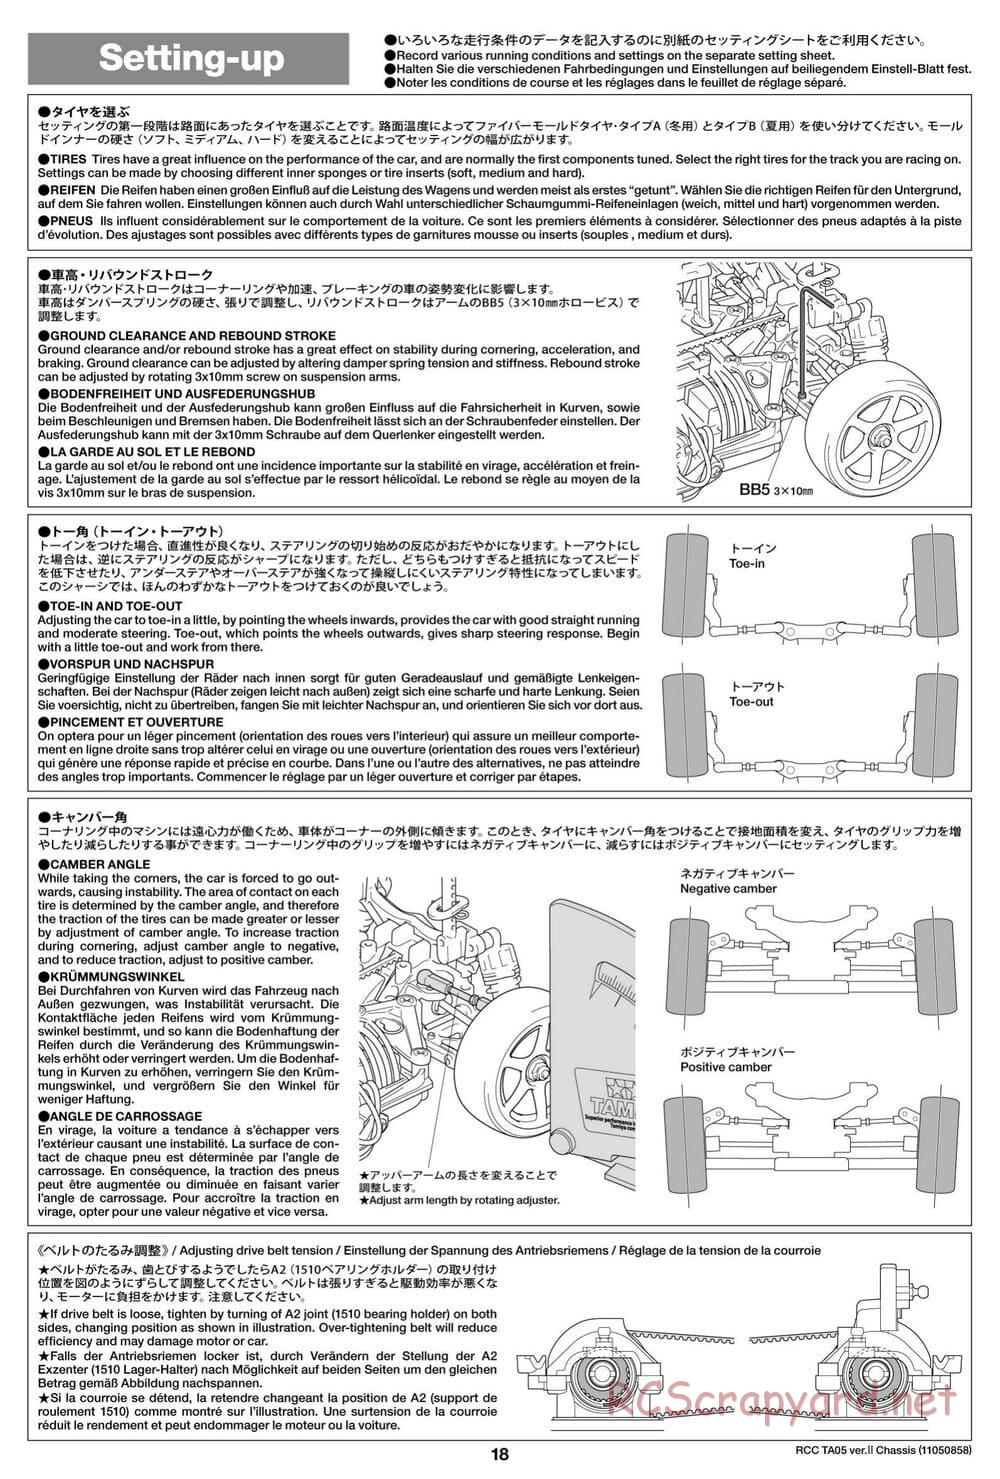 Tamiya - TA05 Ver.II Chassis - Manual - Page 18